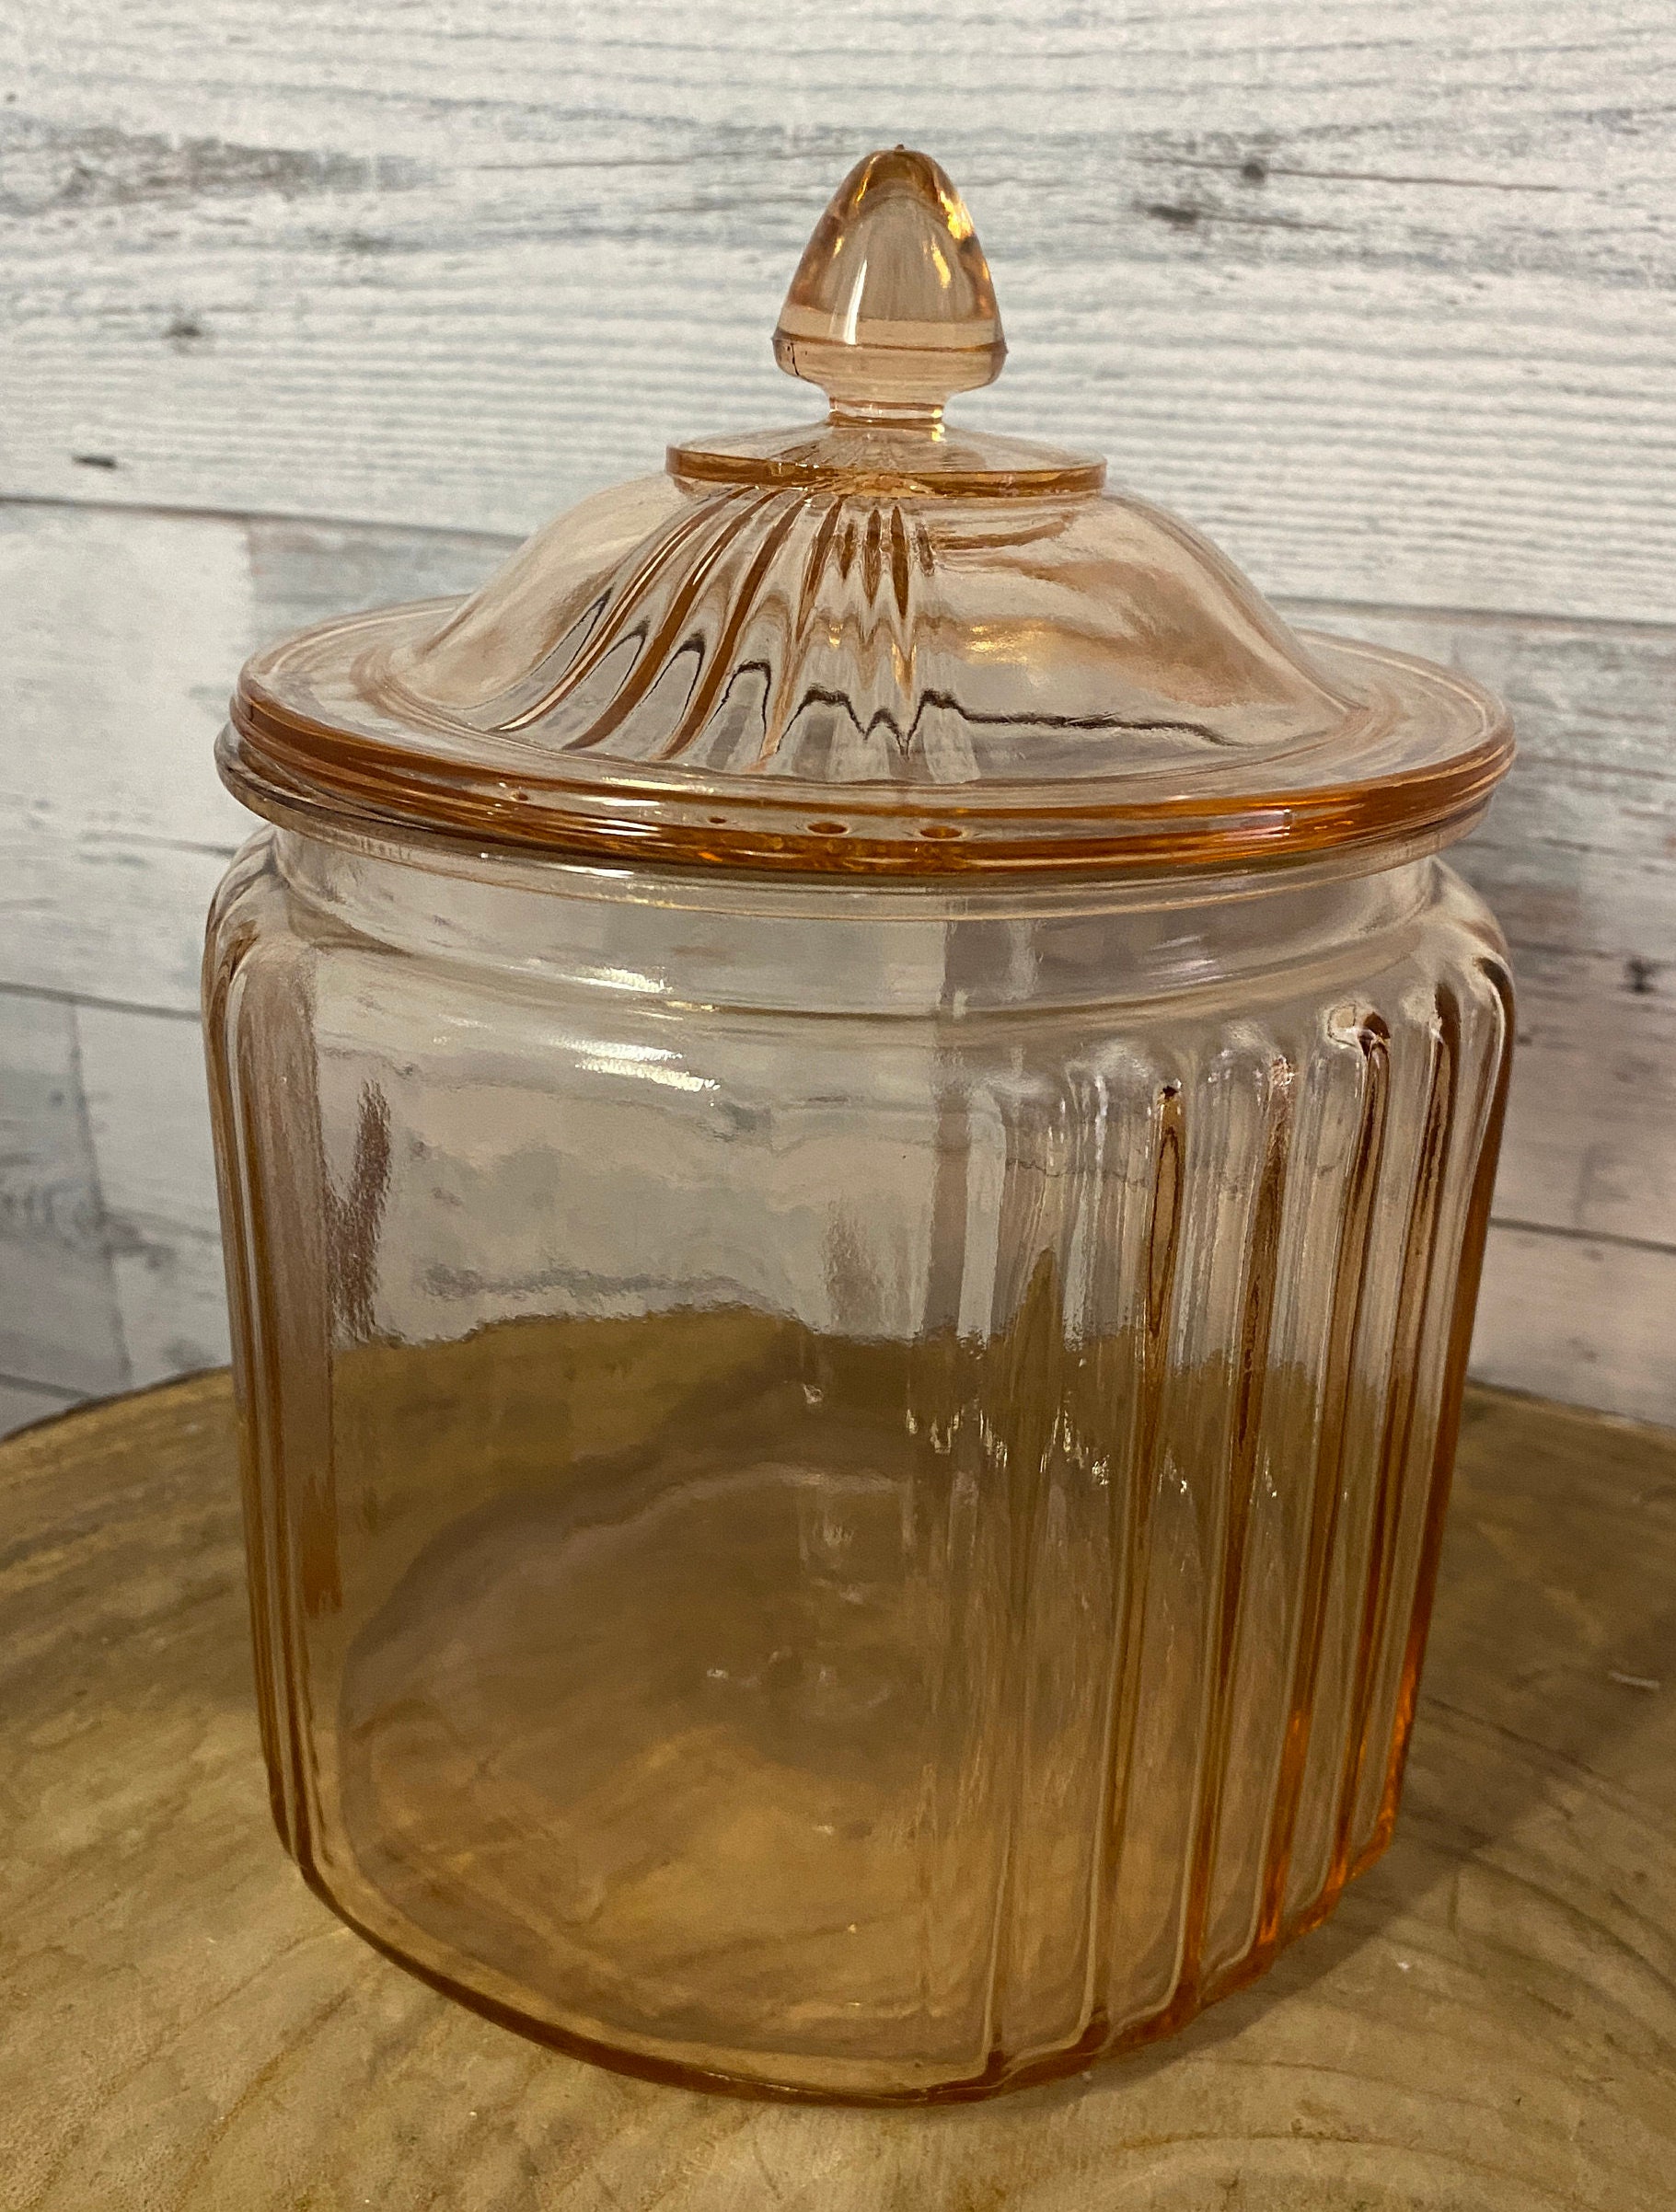 Sold at Auction: VINTAGE CABBAGE ROSE PINK GLASS BISCUIT JAR